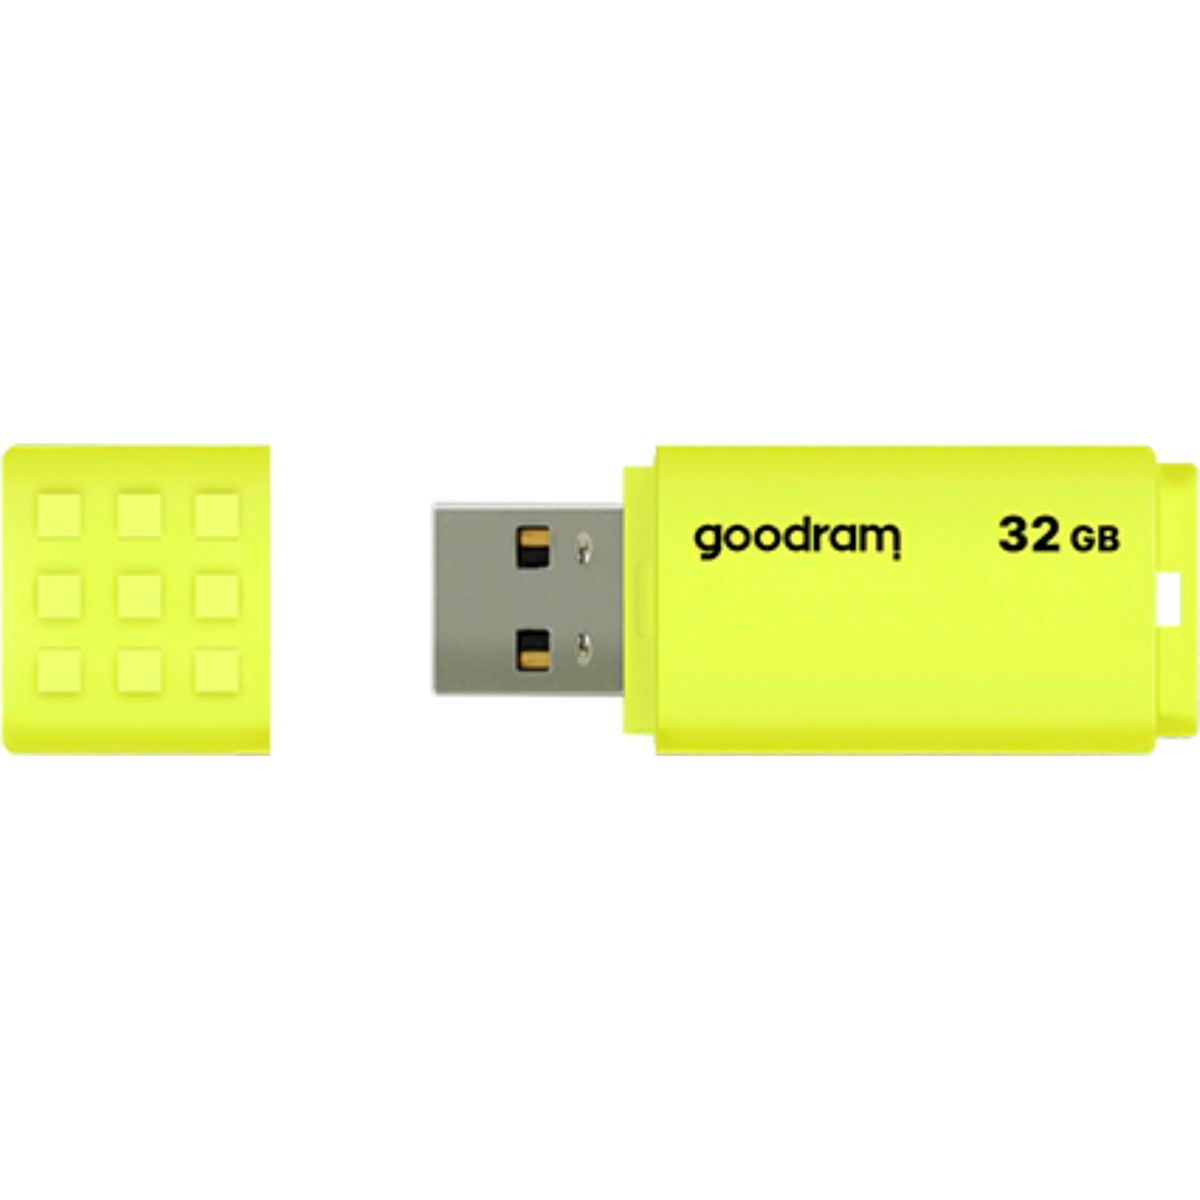 GB) 32GB (gelb, Yellow UME2 2.0 USB USB GOODRAM 32 Stick